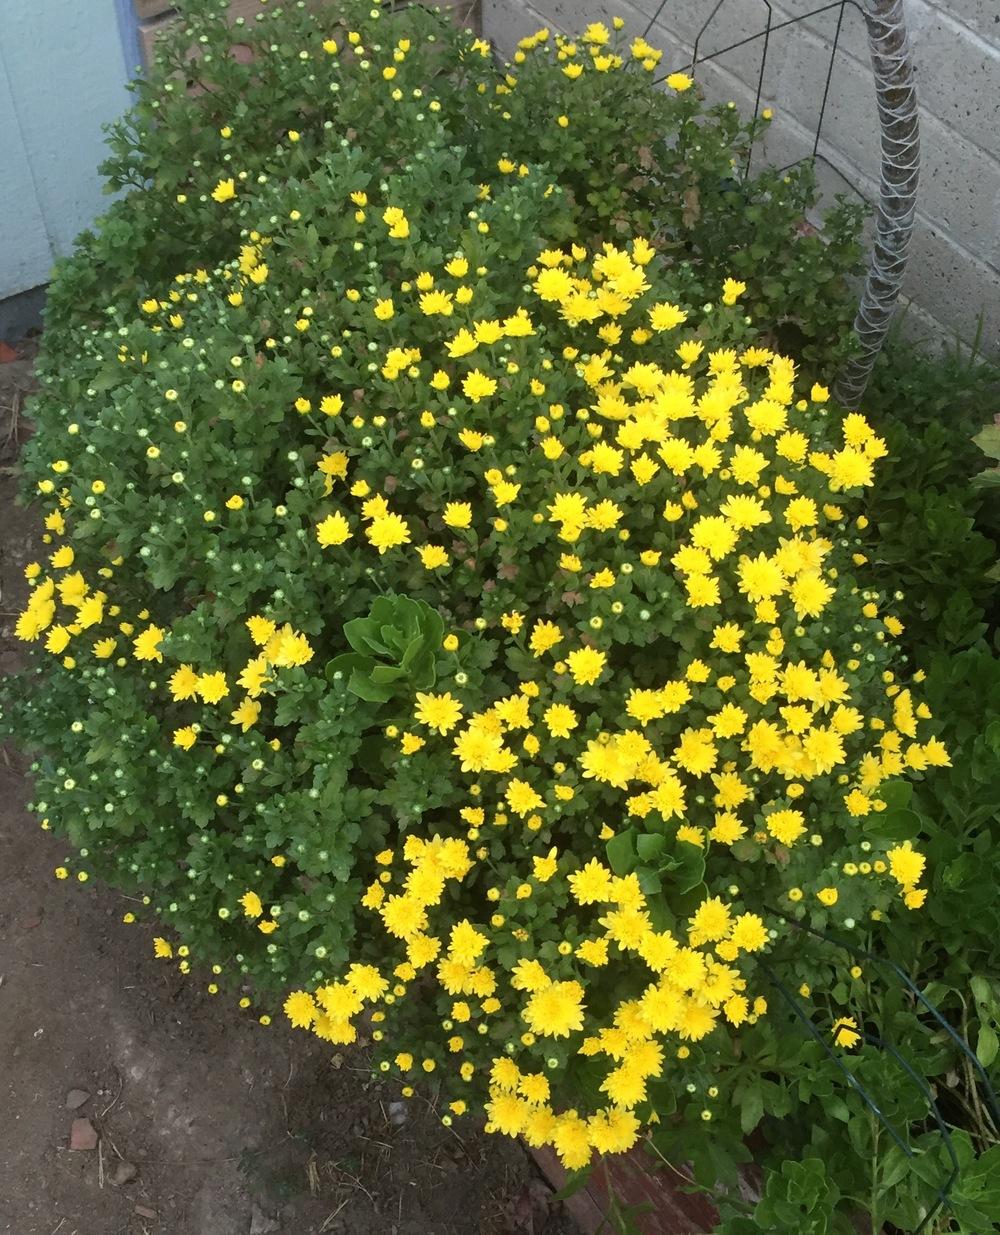 Photo of Chrysanthemum uploaded by Englishgardener